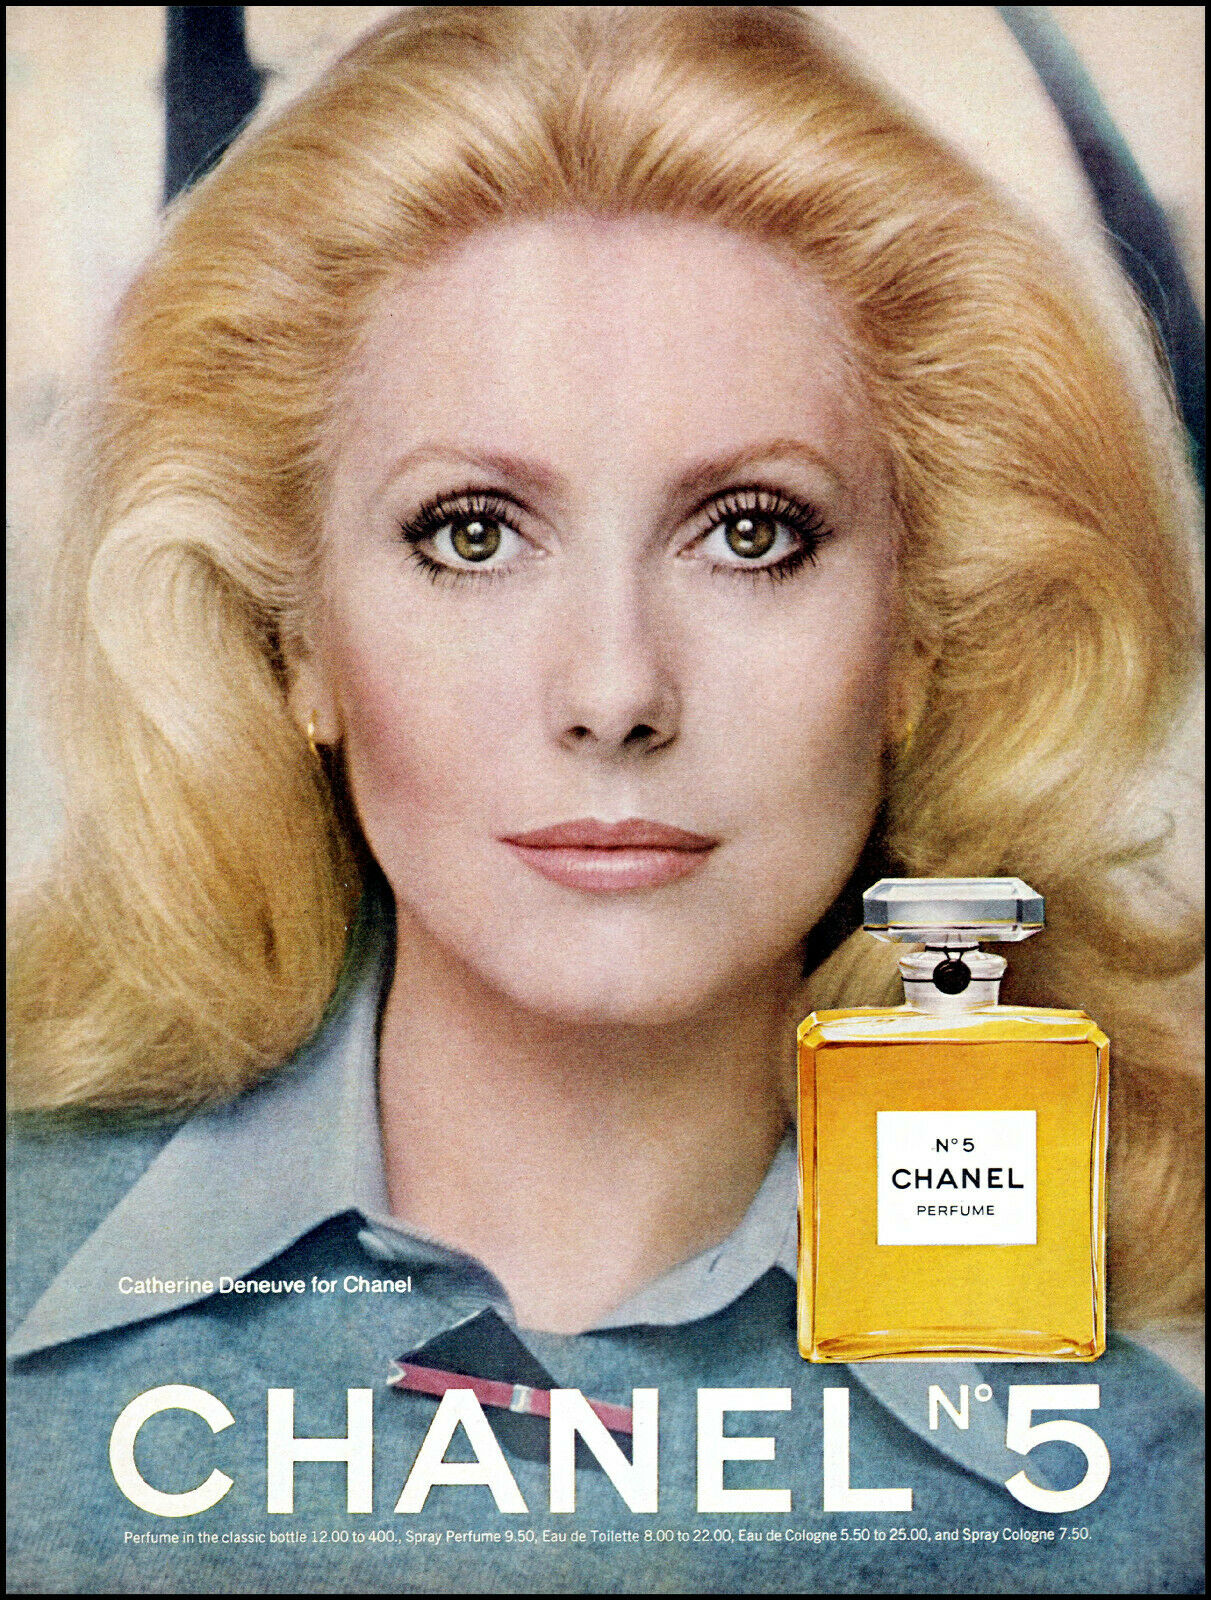 1976 Catherine Deneuve photo Chanel No 5 perfume vintage print Ad adl31